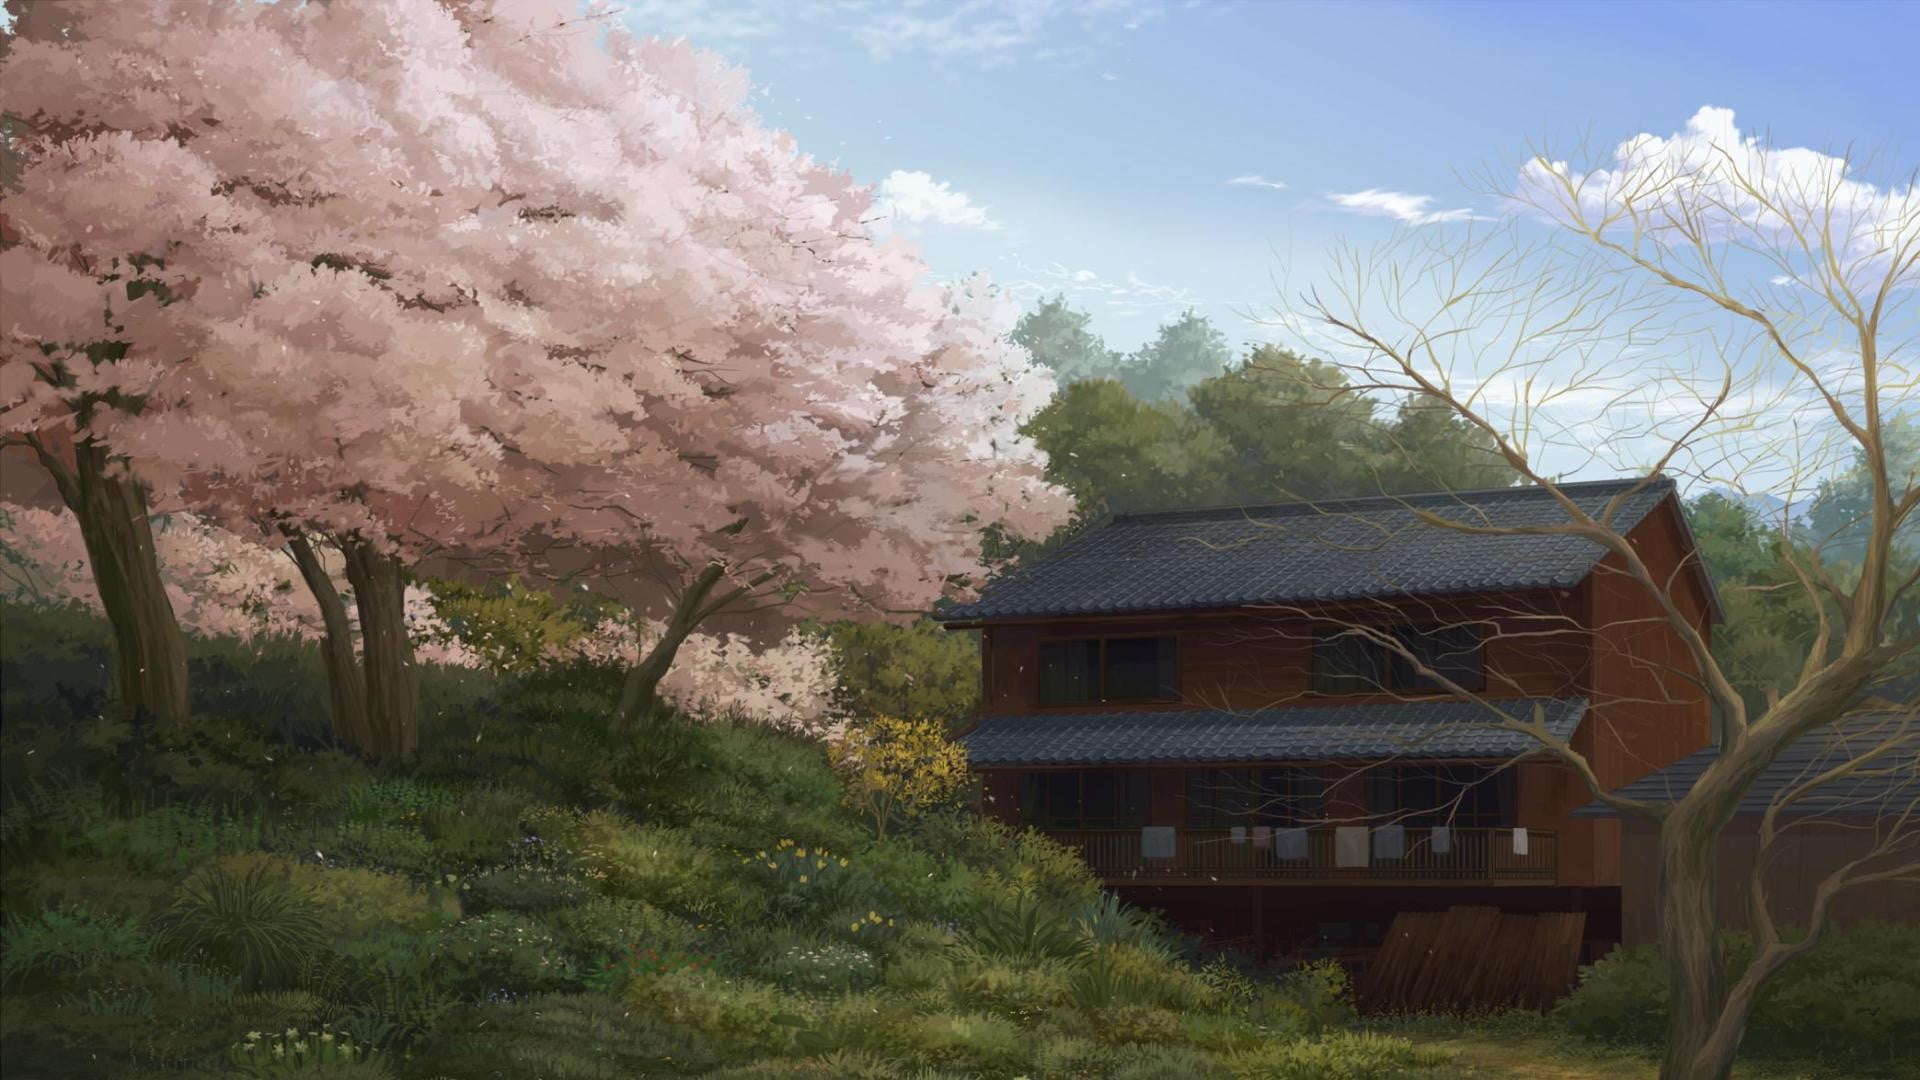 1366x768 resolution | pink sakura trees near the wooden house painting